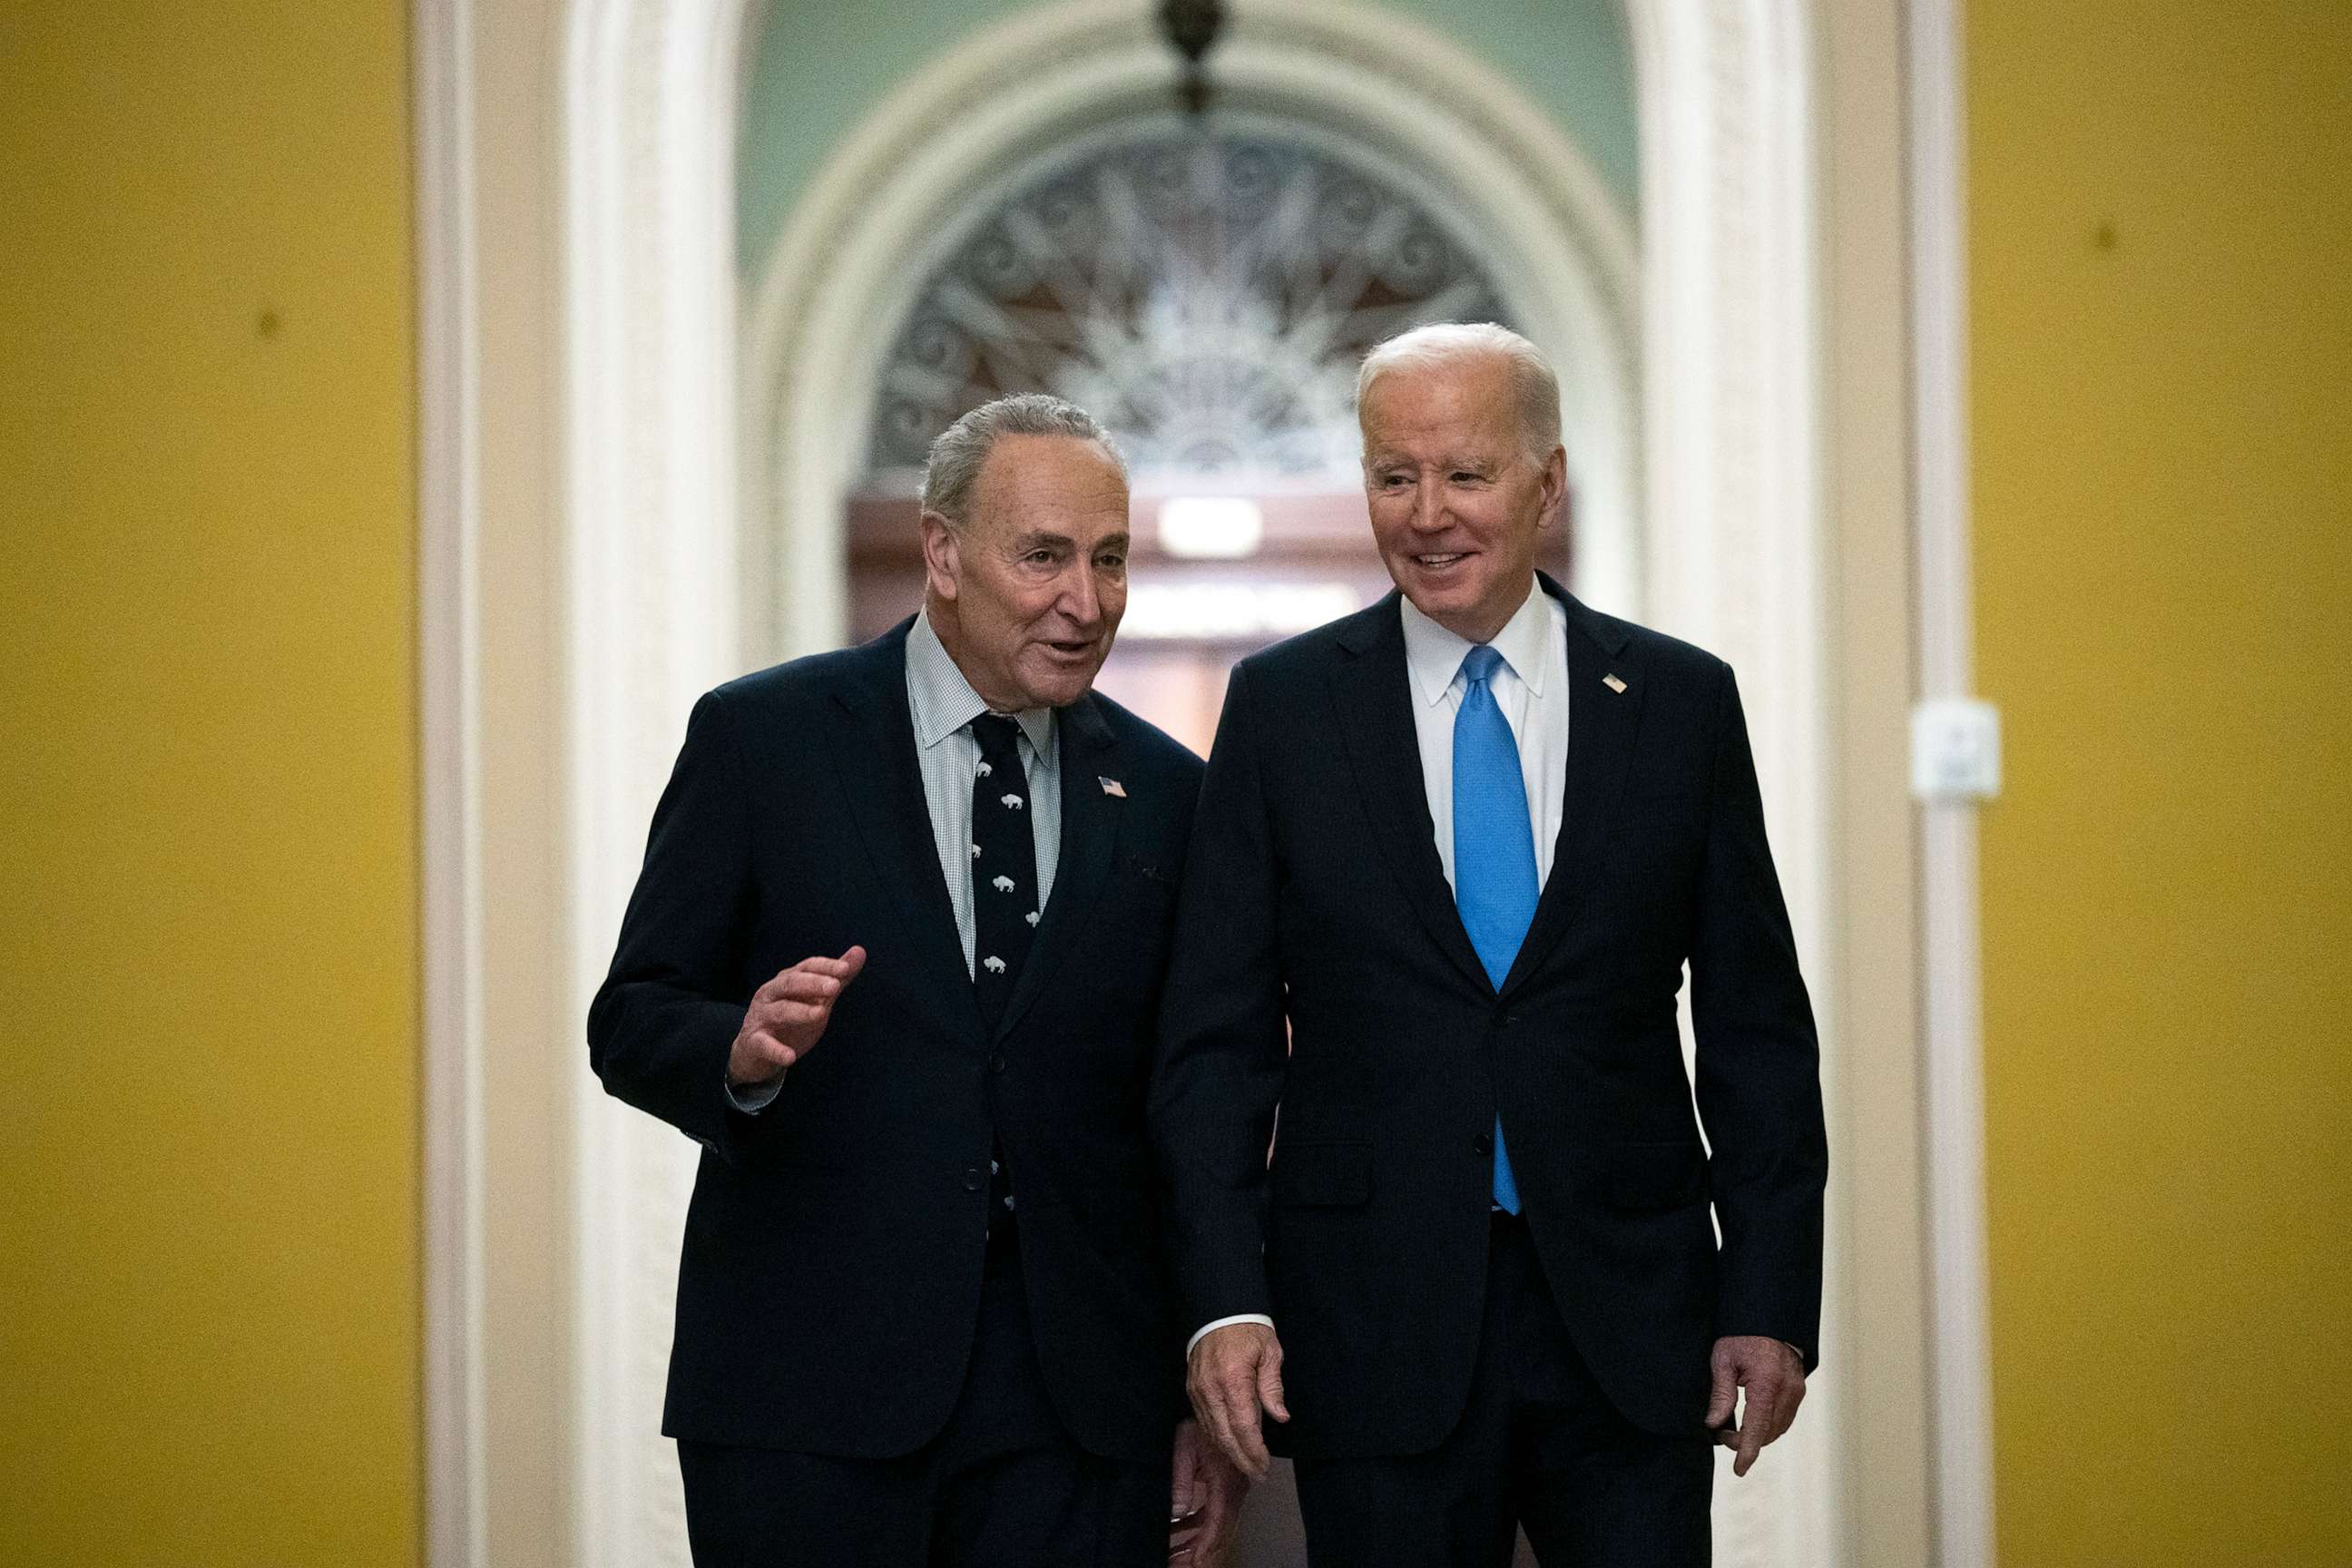 PHOTO: Senate Majority Leader Chuck Schumer walks with President Joe Biden as he arrives at the Capitol, March 2, 2023.